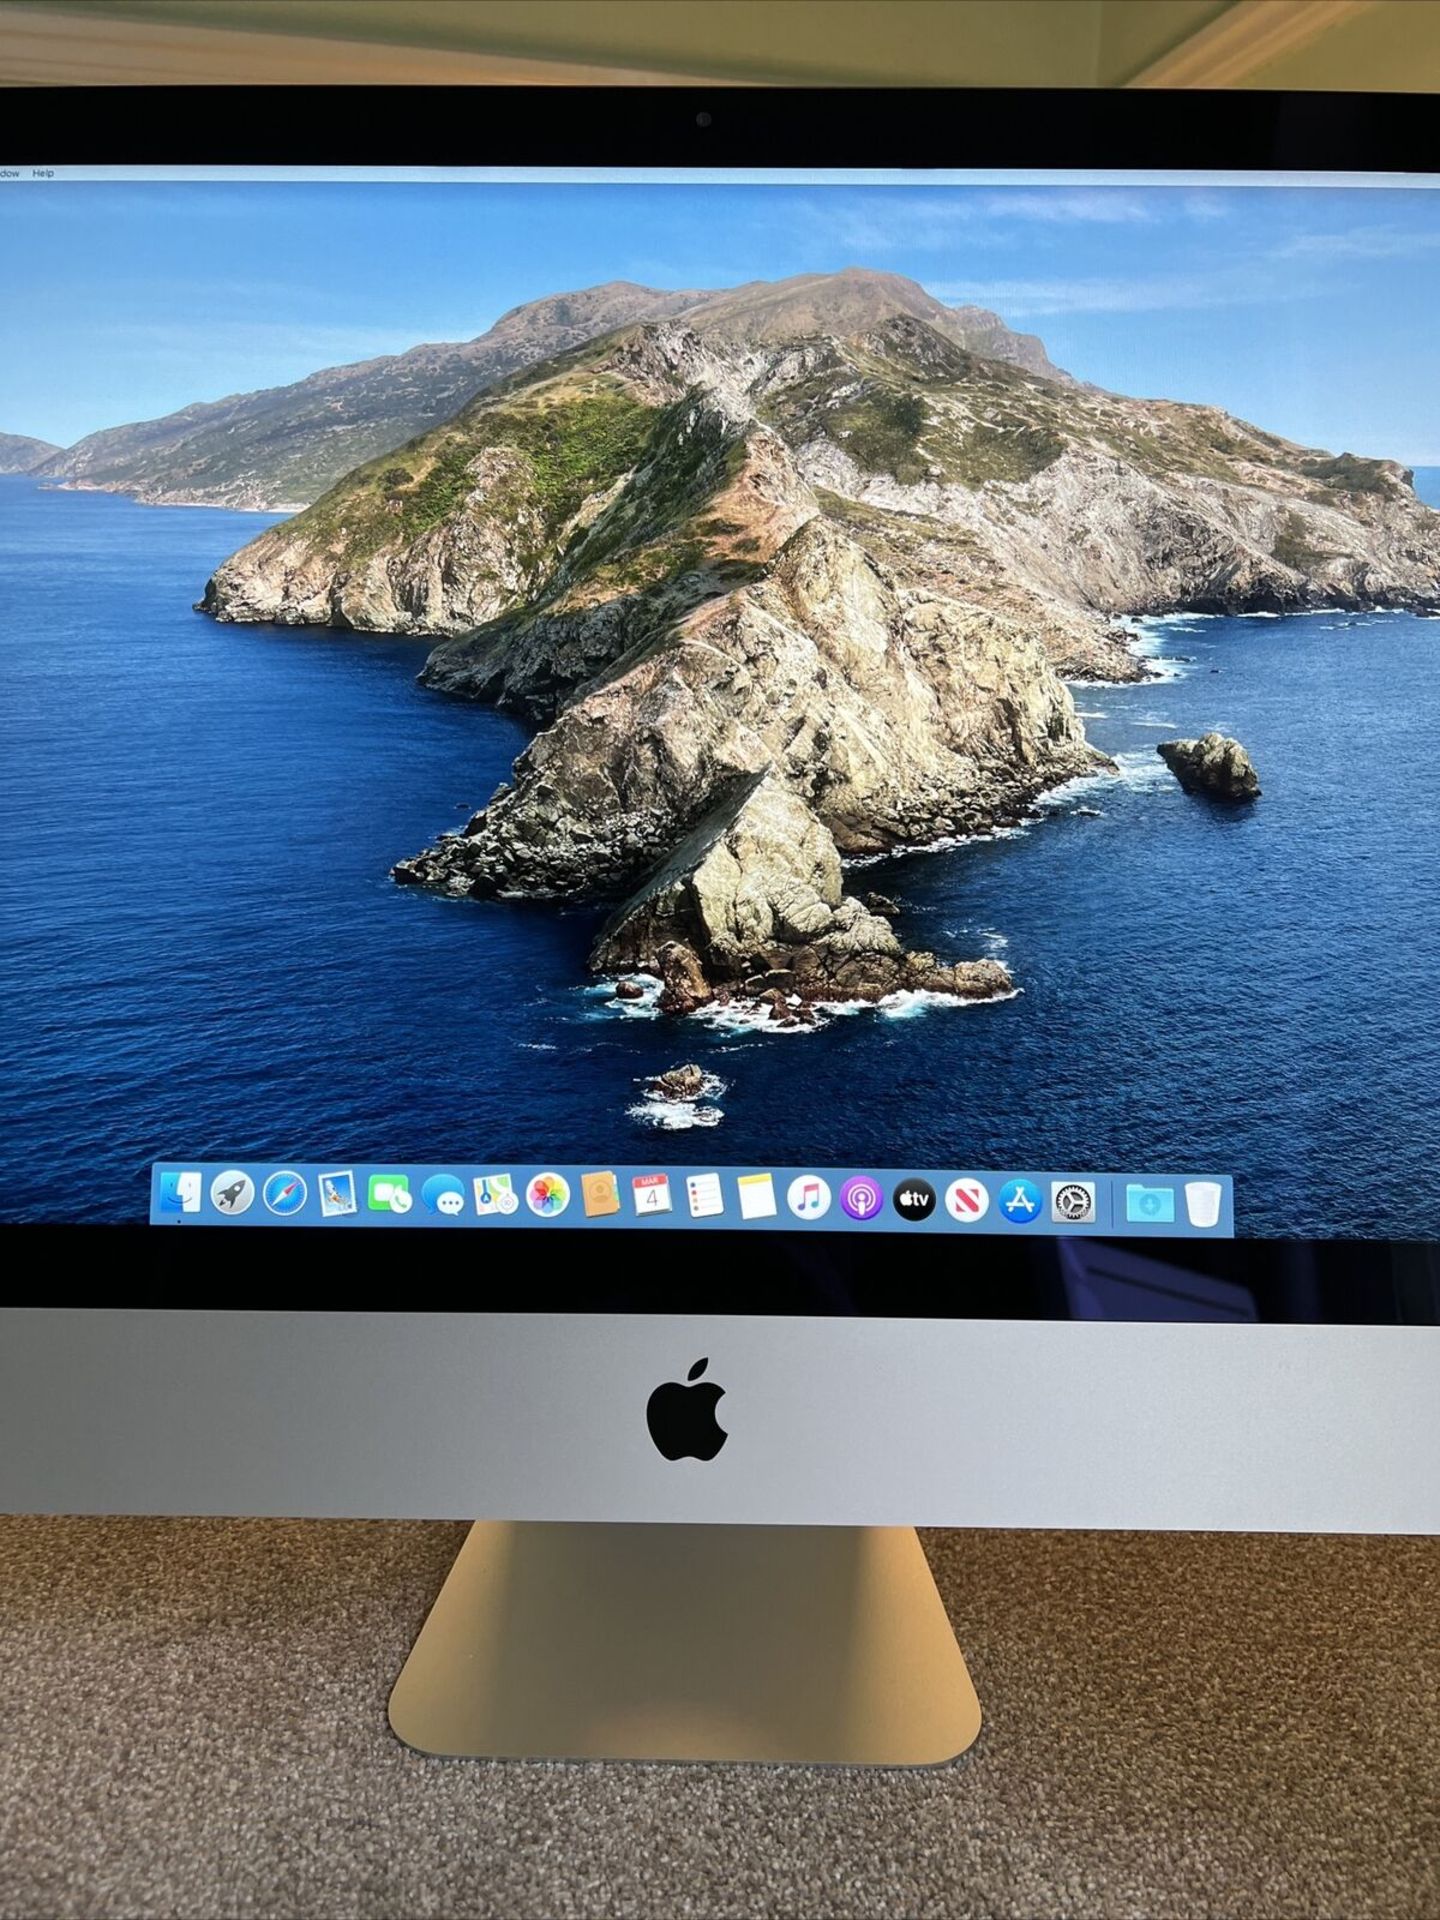 Apple iMac 21.5"" A1418 OS X Catalina Intel Core I5 8Gb DDR3 1TB HD GeForce GT 640M office - Image 3 of 5